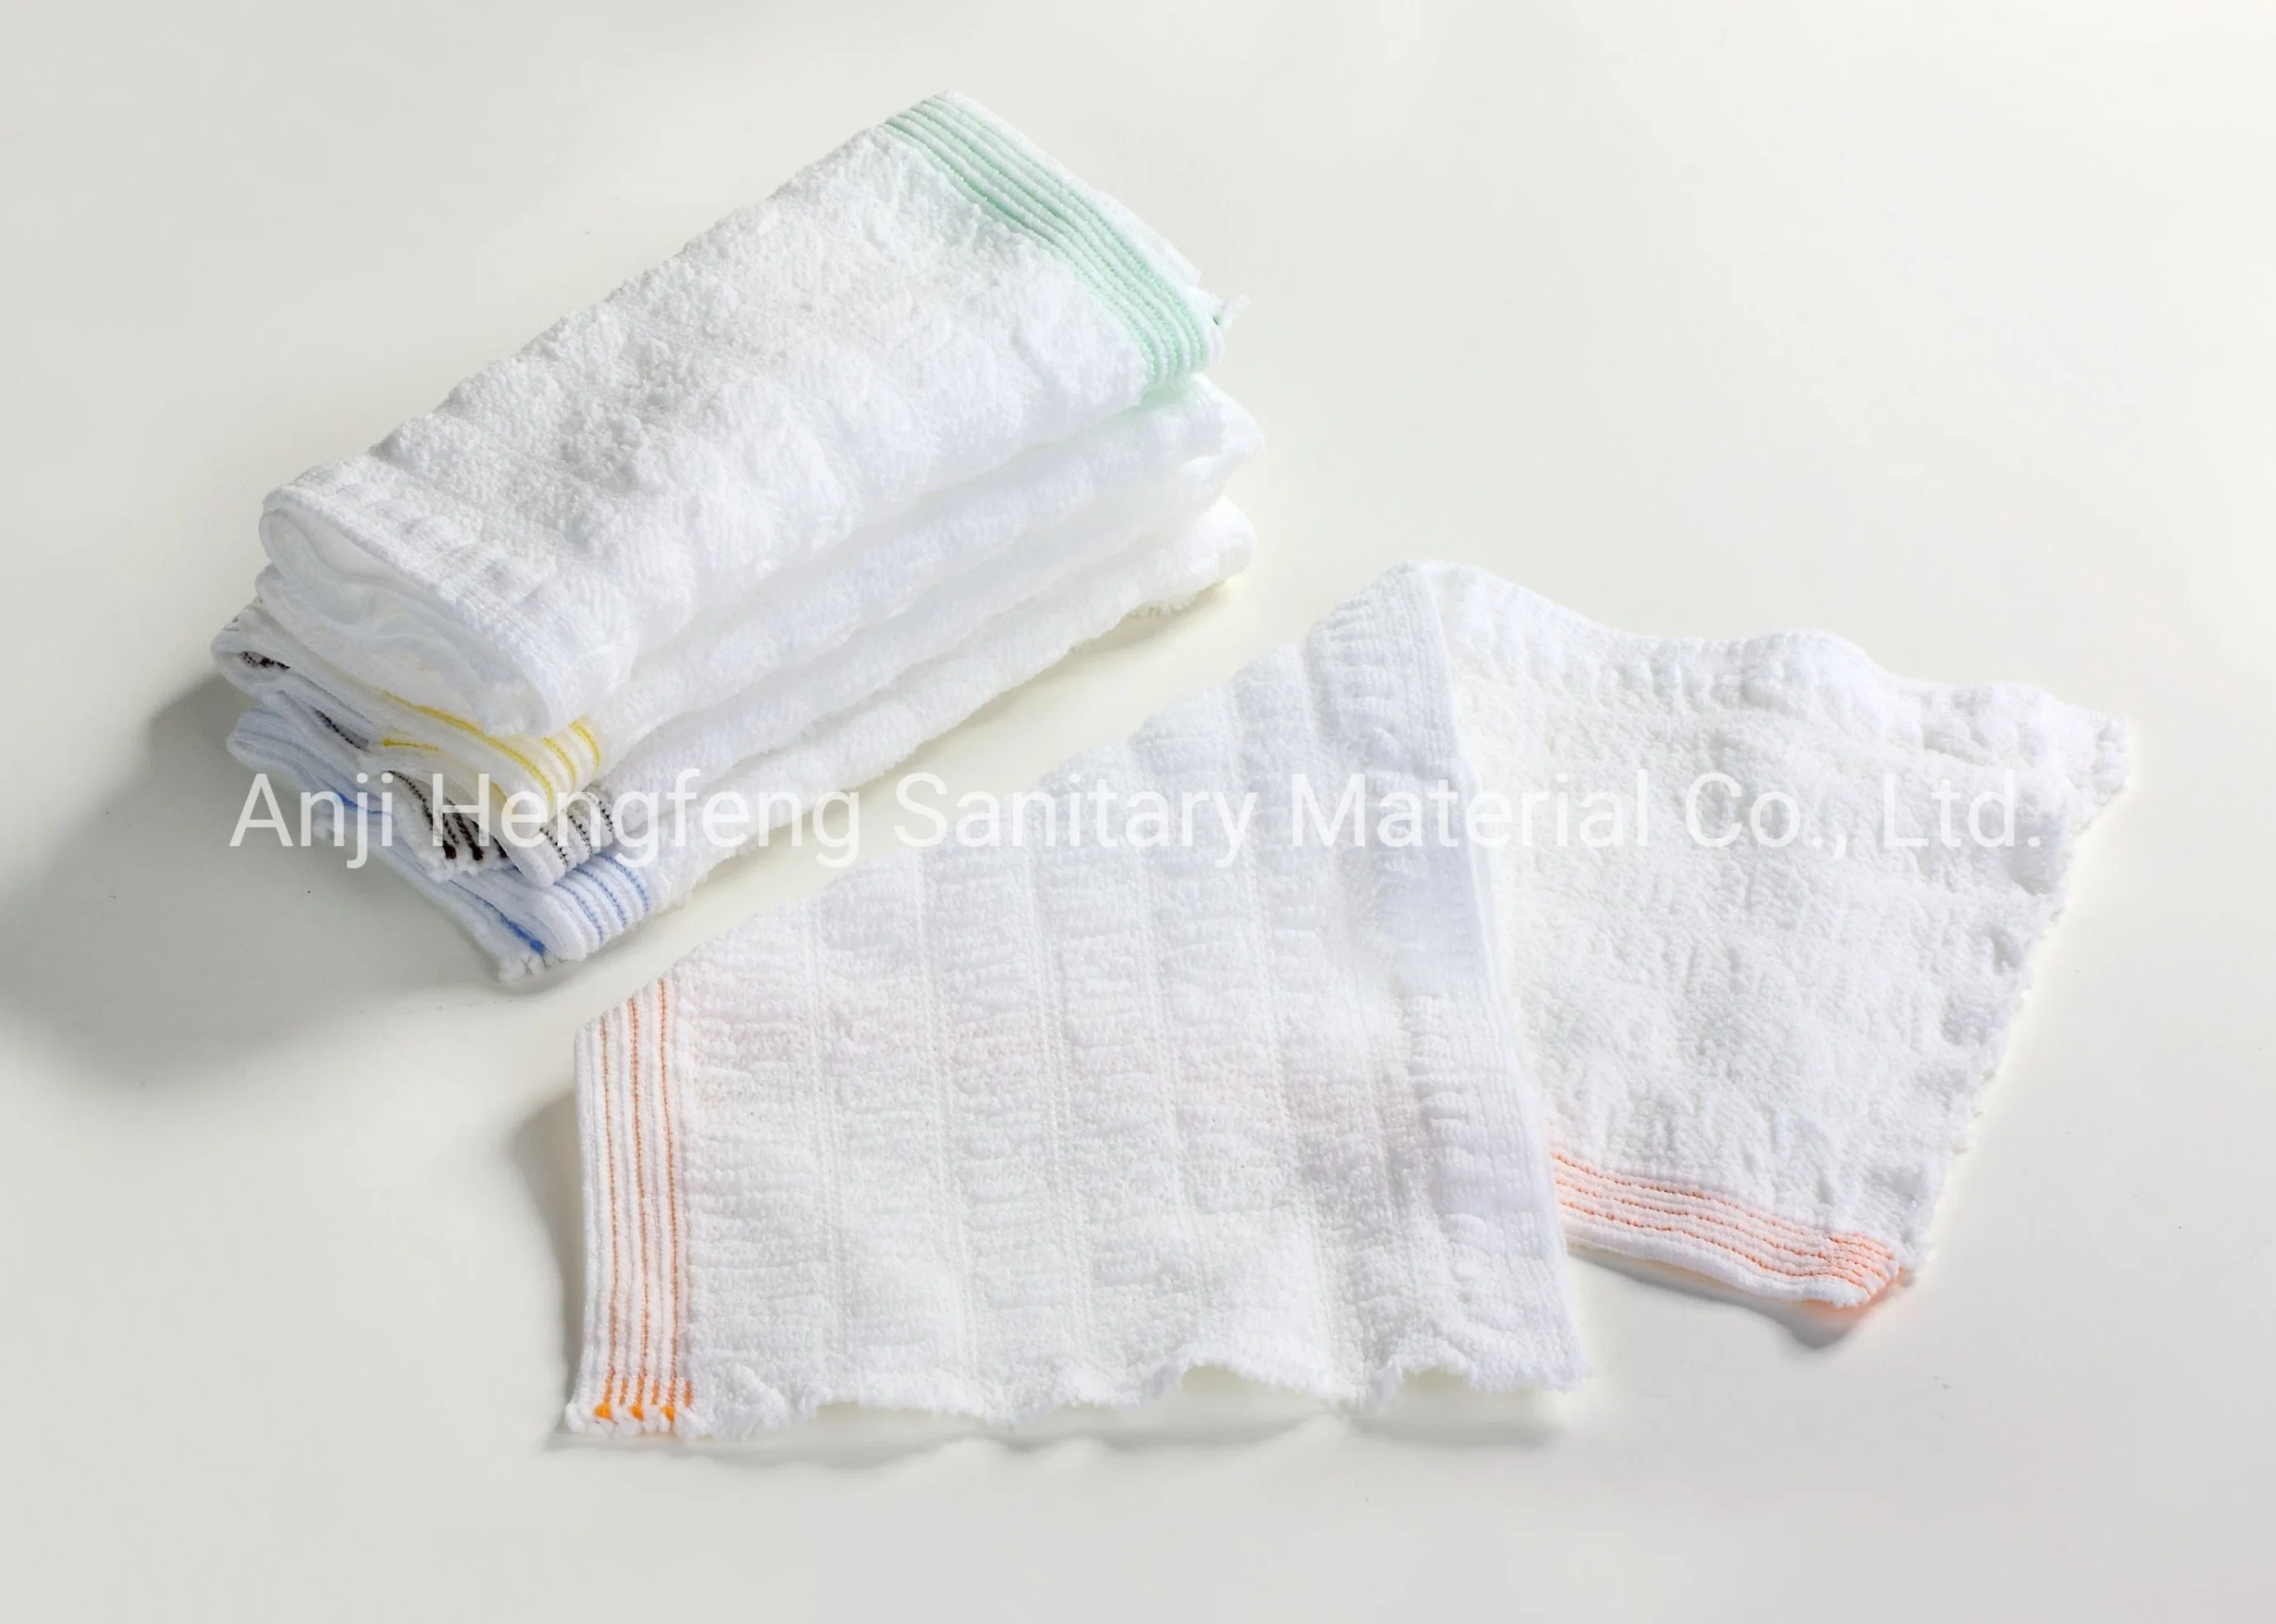 Disposable Cotton Underwear/Underpants for Men and Women